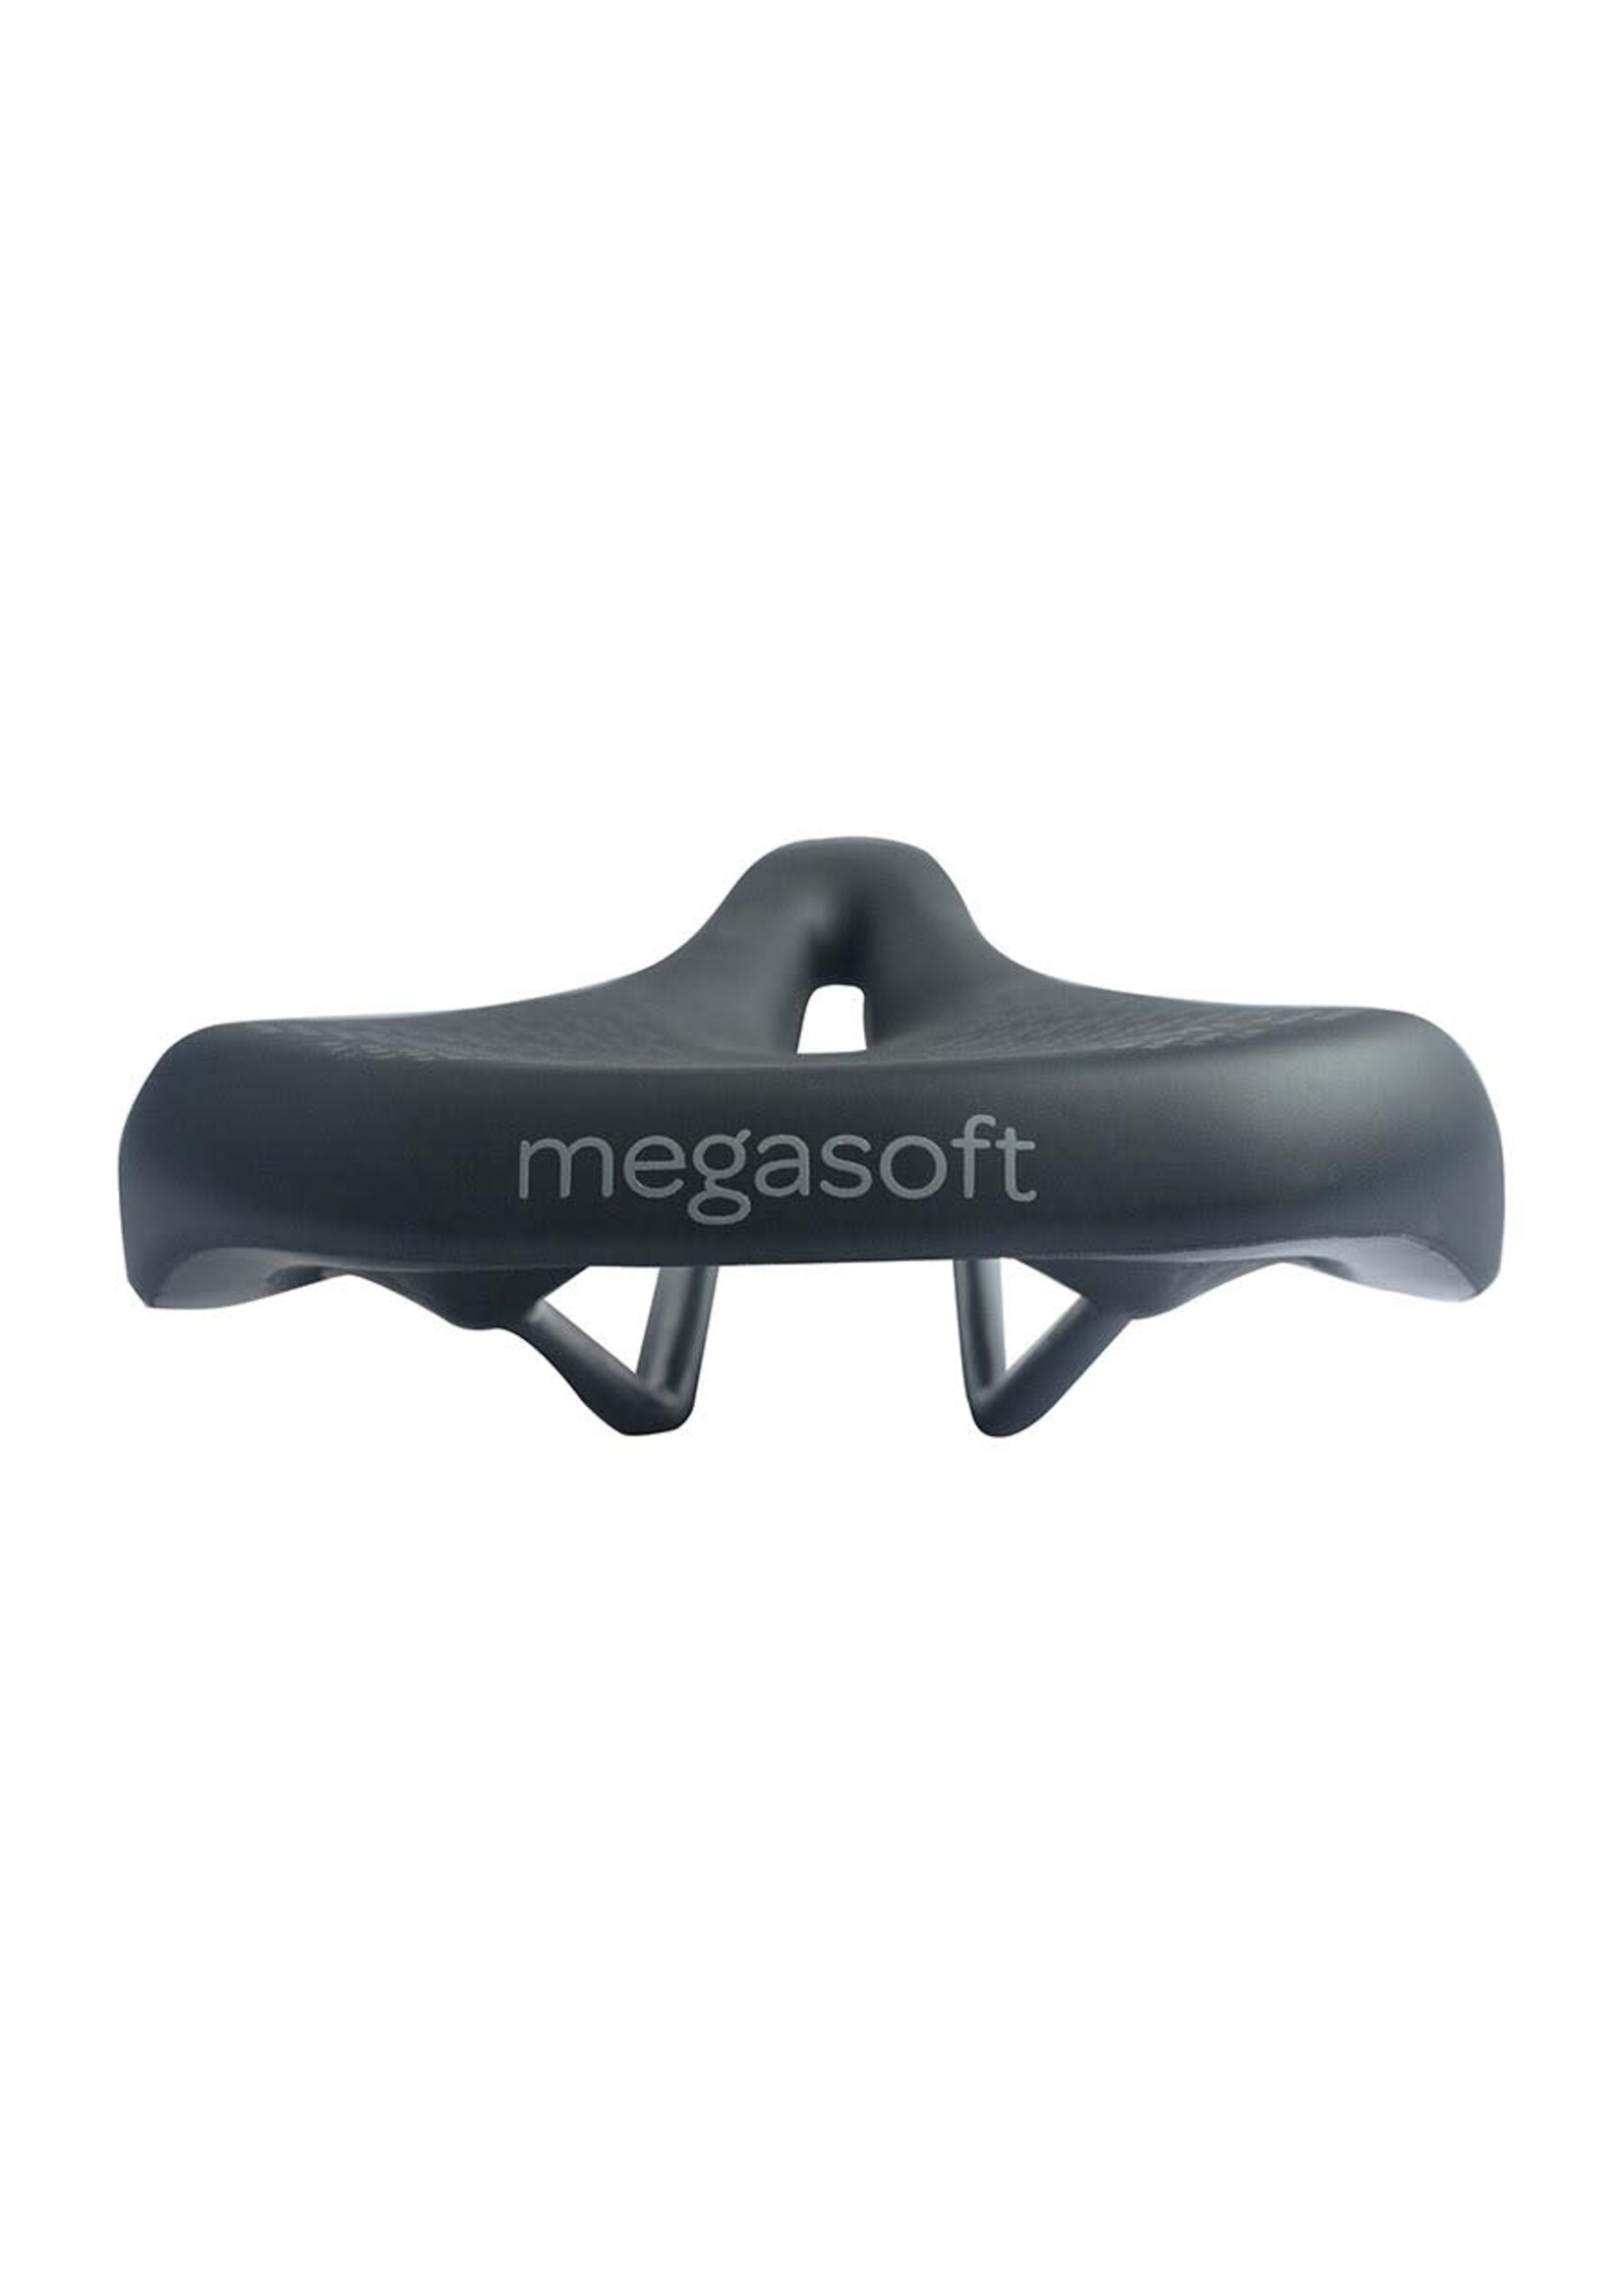 Megasoft MEGASOFT - Selle - S155 Sport